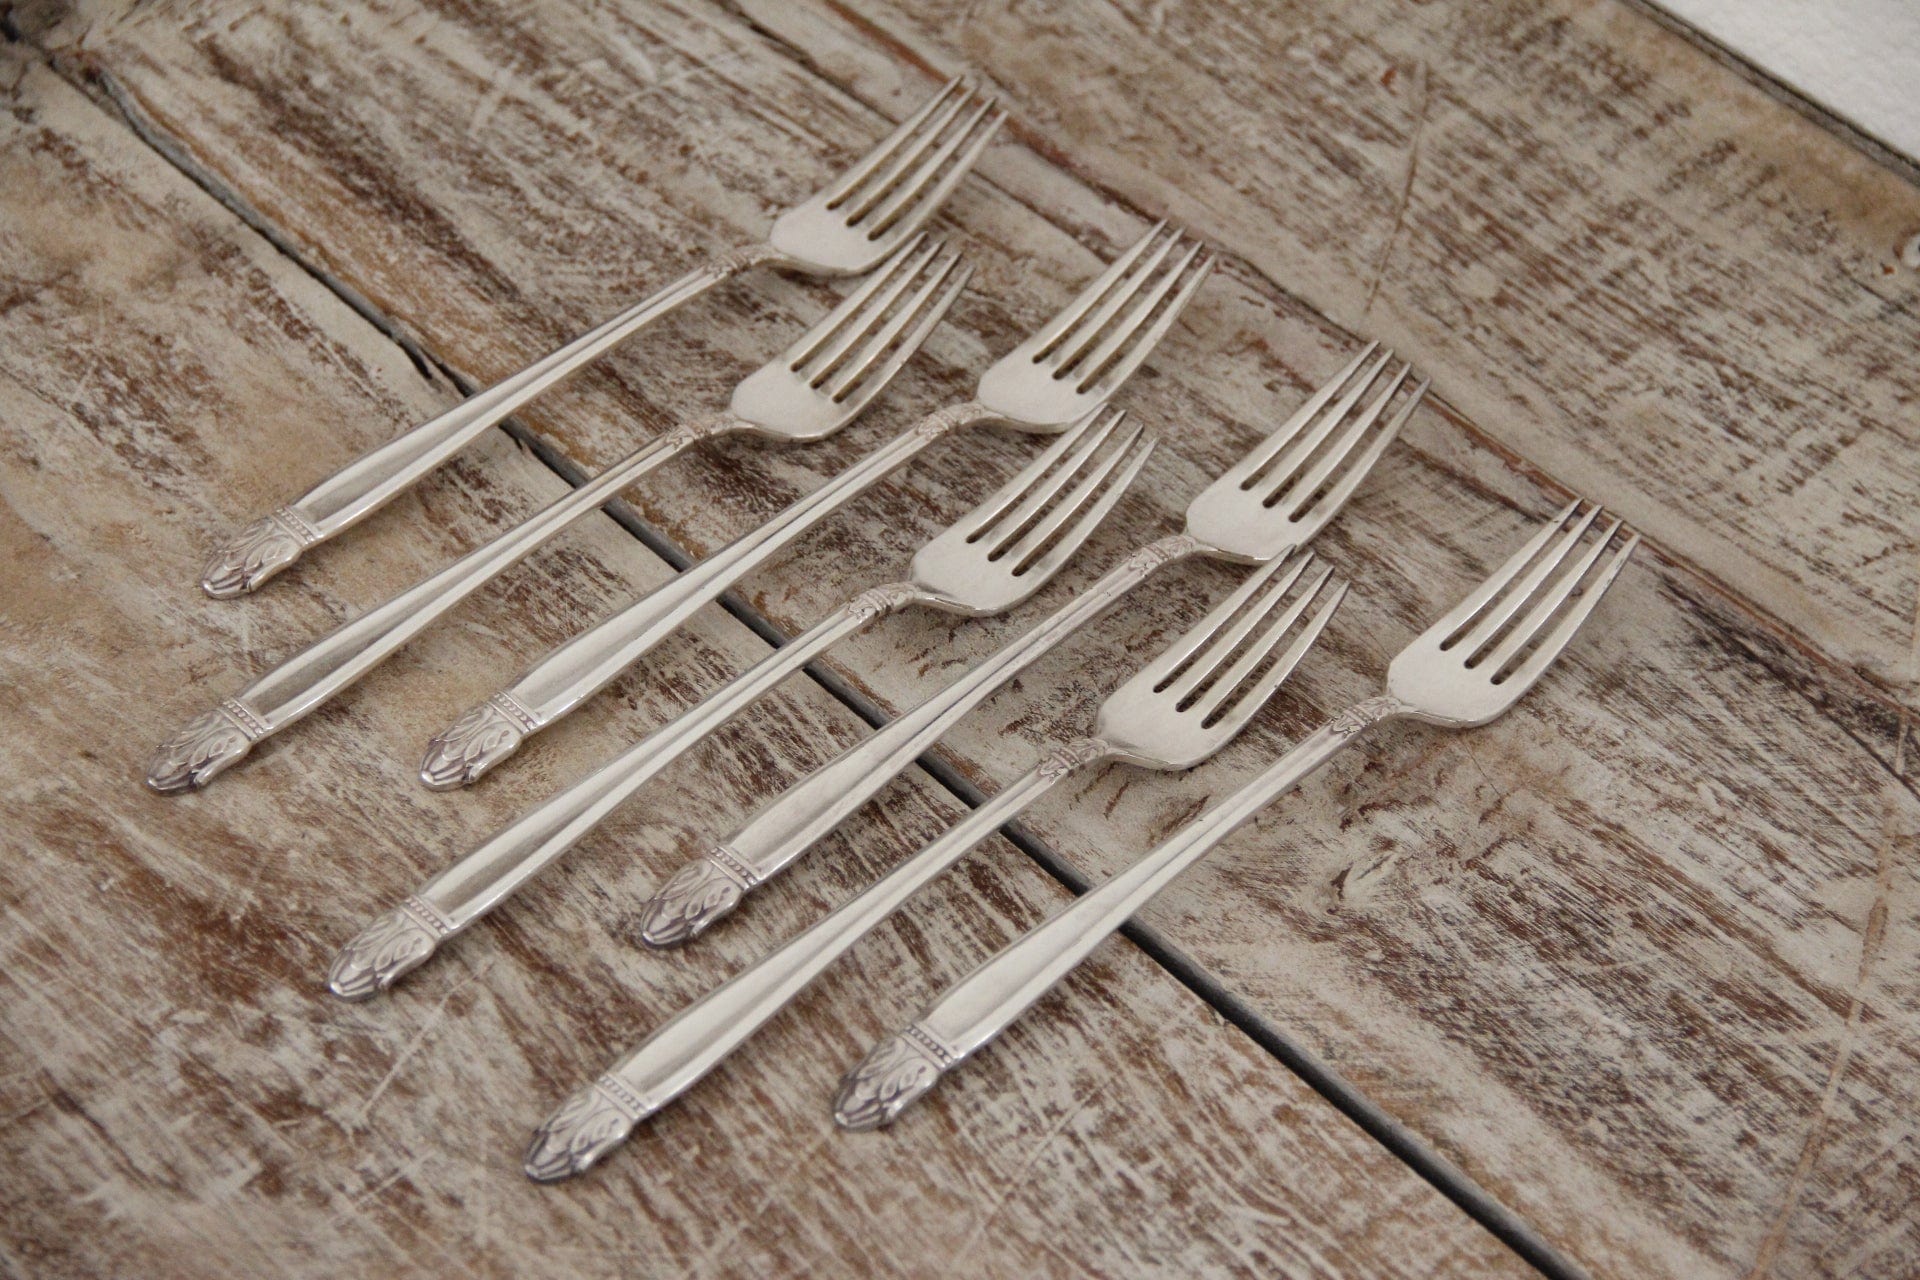 Antique Silver Dinner Fork | Danish Princess Pattern | Flatware 7 Pcs. - Debra Hall Lifestyle